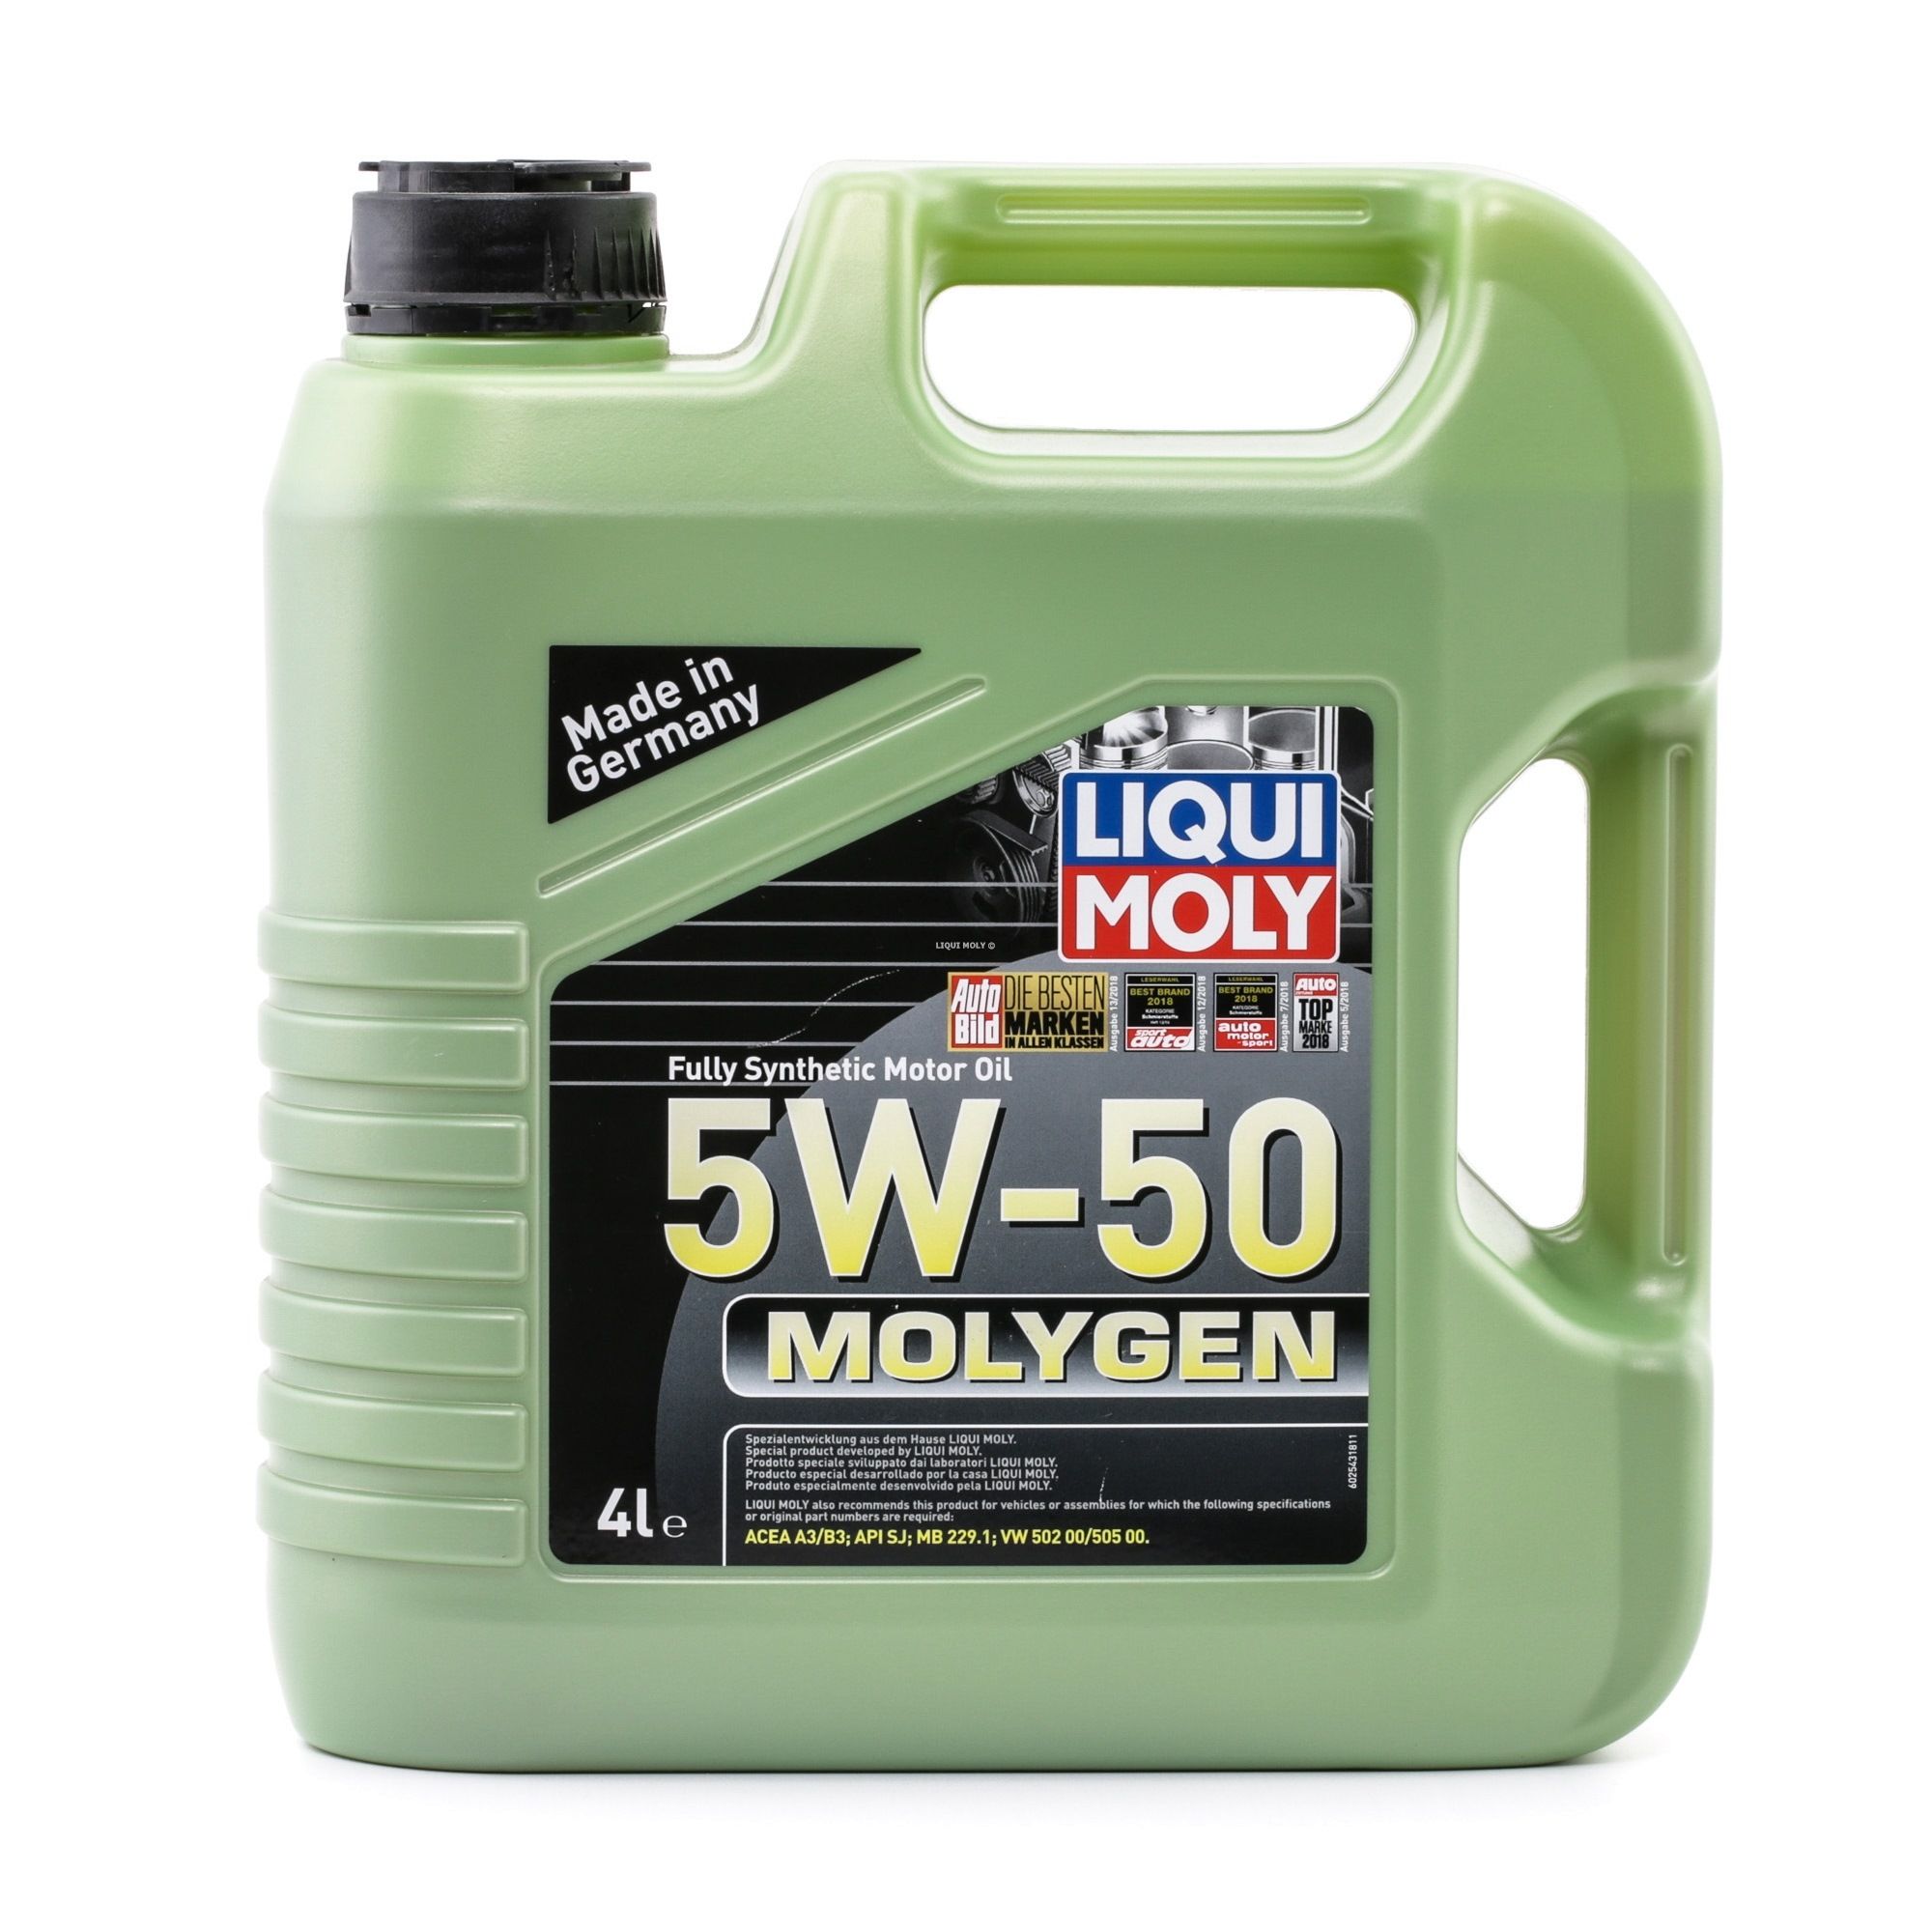 Molygen5W50 LIQUI MOLY Molygen 5W-50, 4l, Synthetiköl Motoröl 2543 günstig